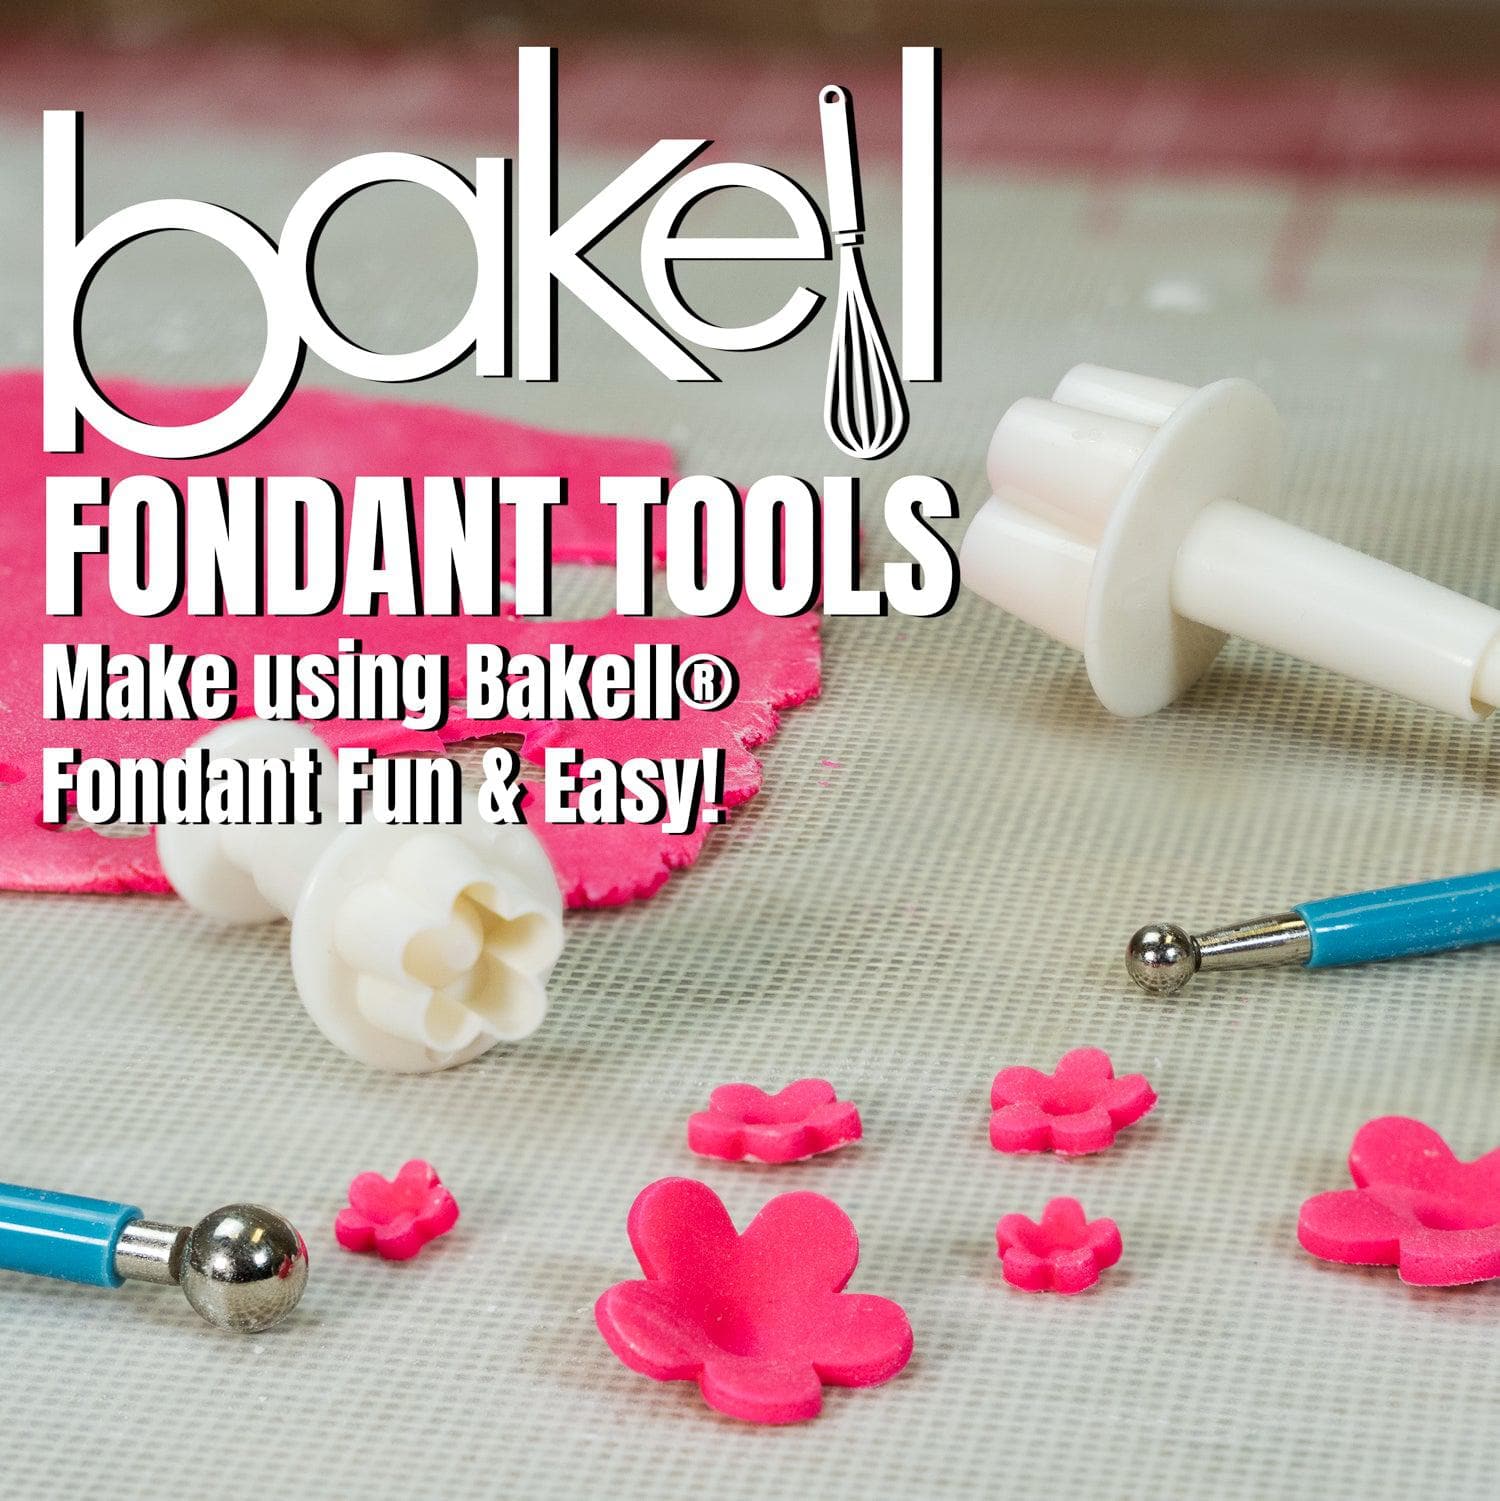 Buy Pink Vanilla Fondant 4oz - Easy to Use - Bakell